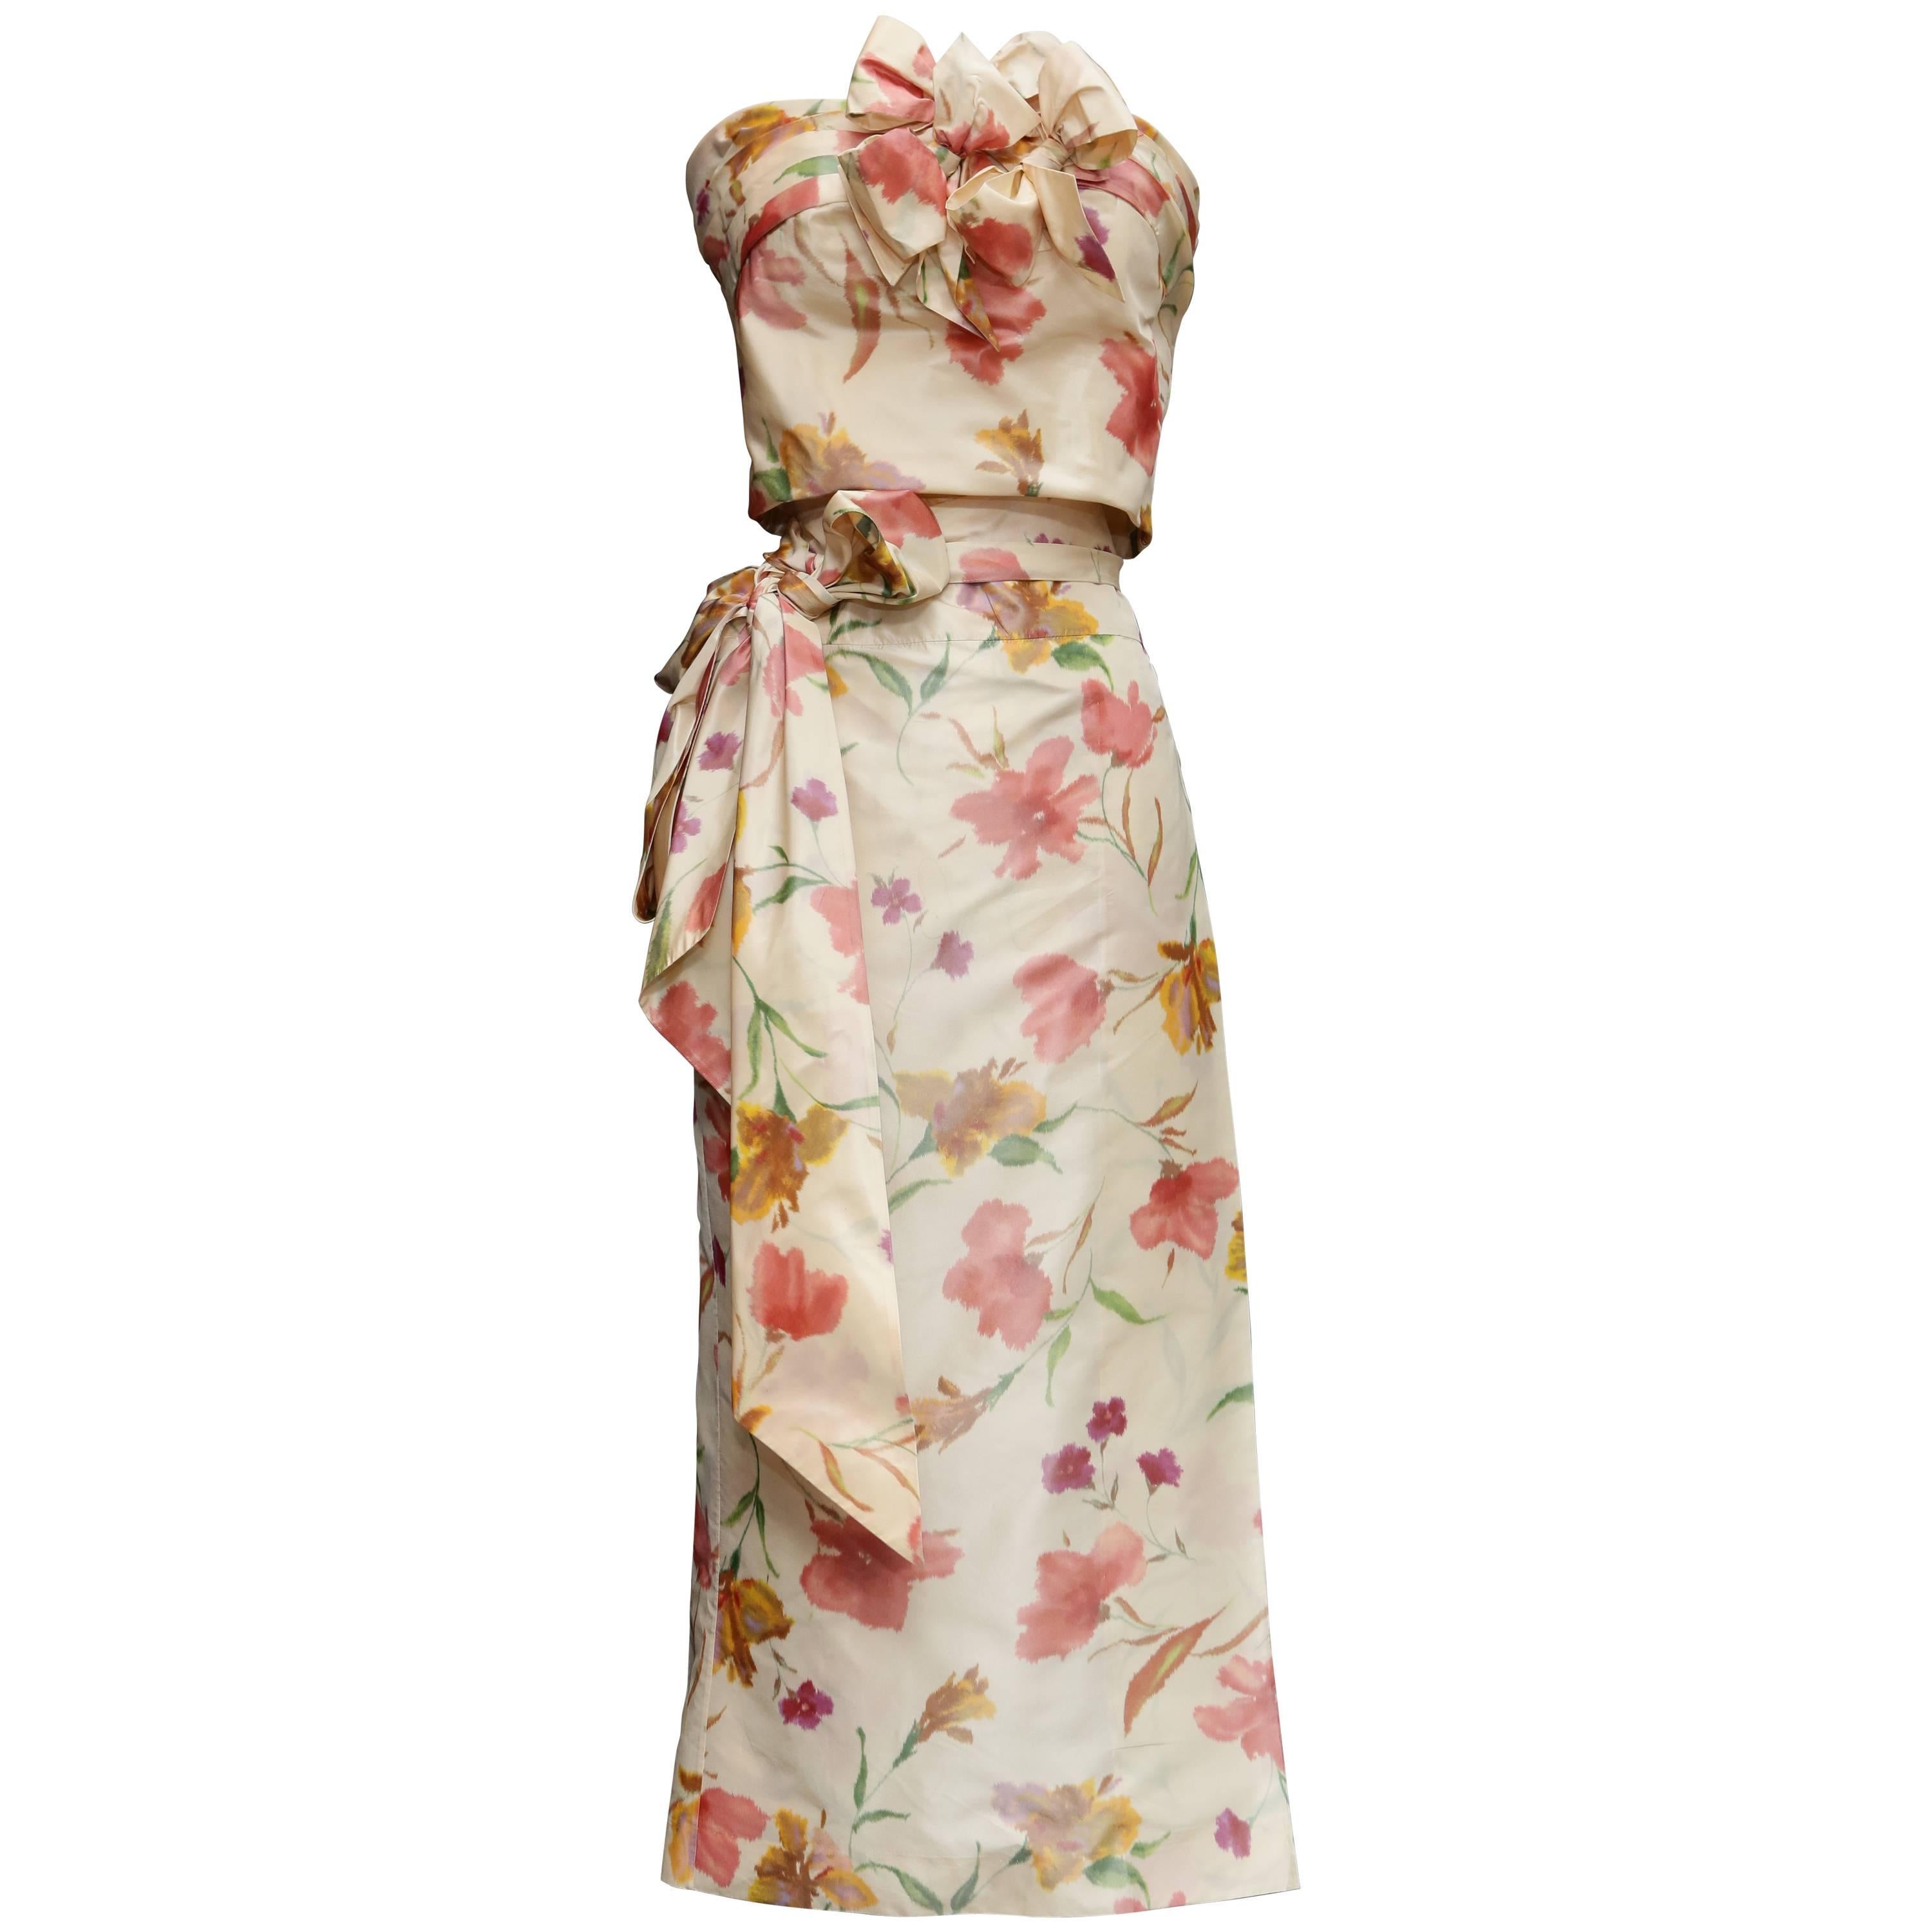 2008 Christian Dior Dress Ensemble in Floral Print For Sale